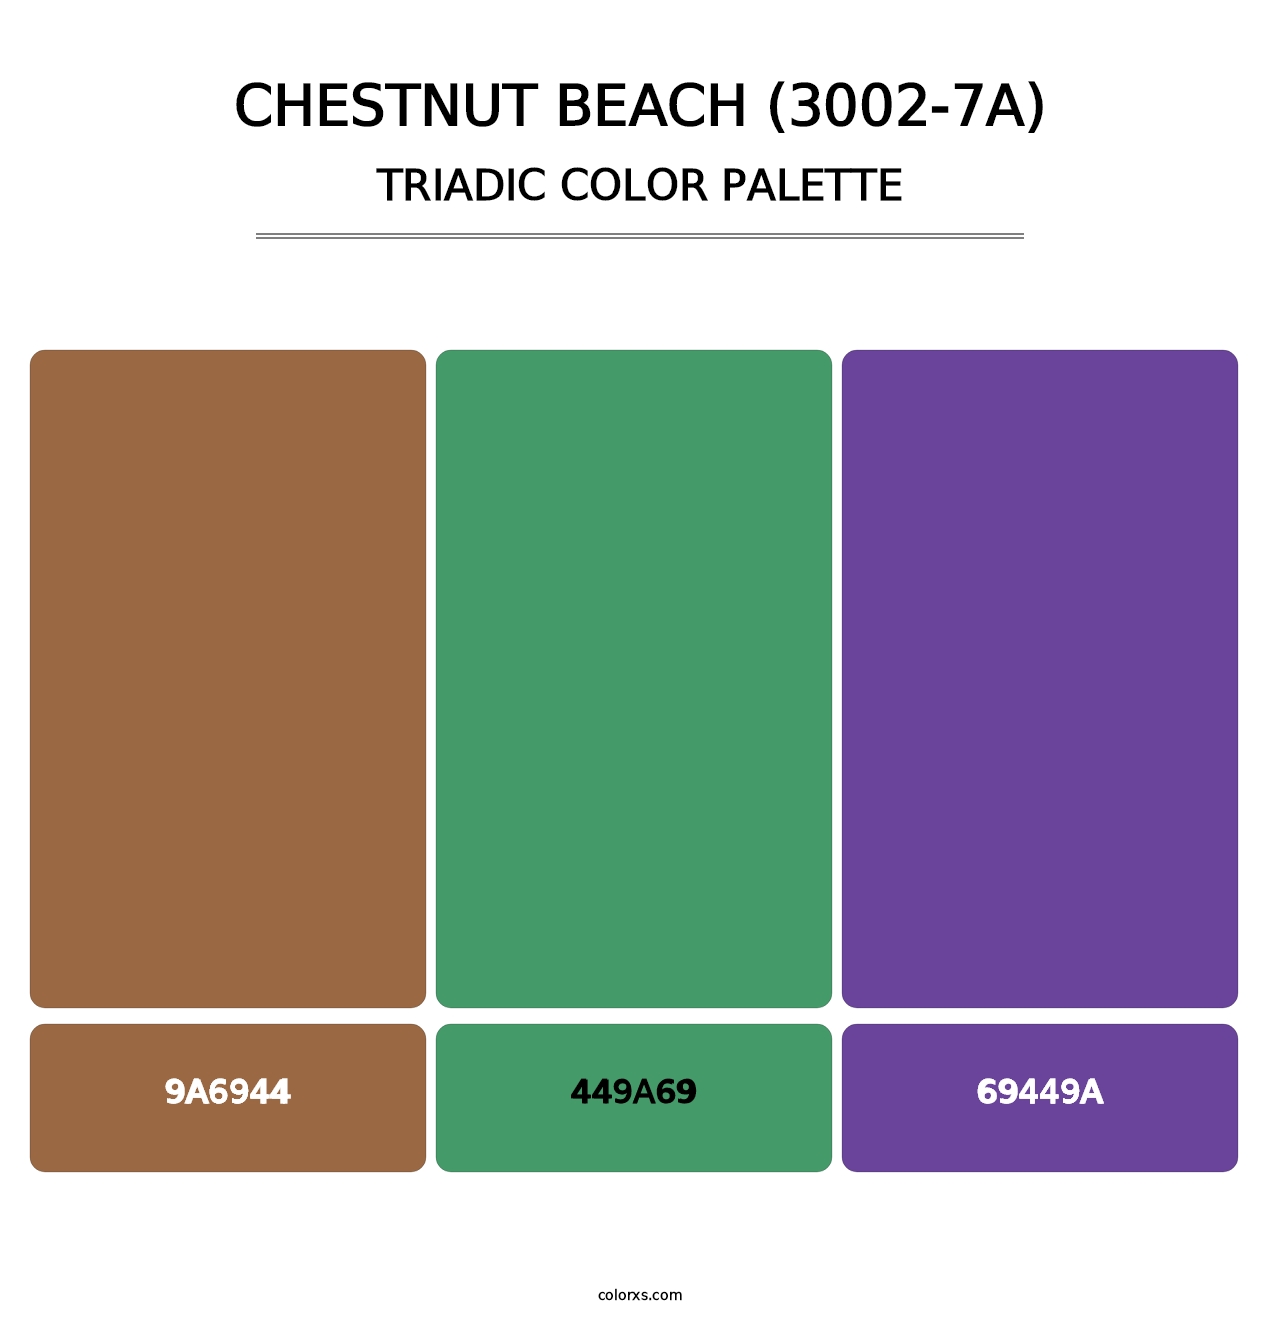 Chestnut Beach (3002-7A) - Triadic Color Palette